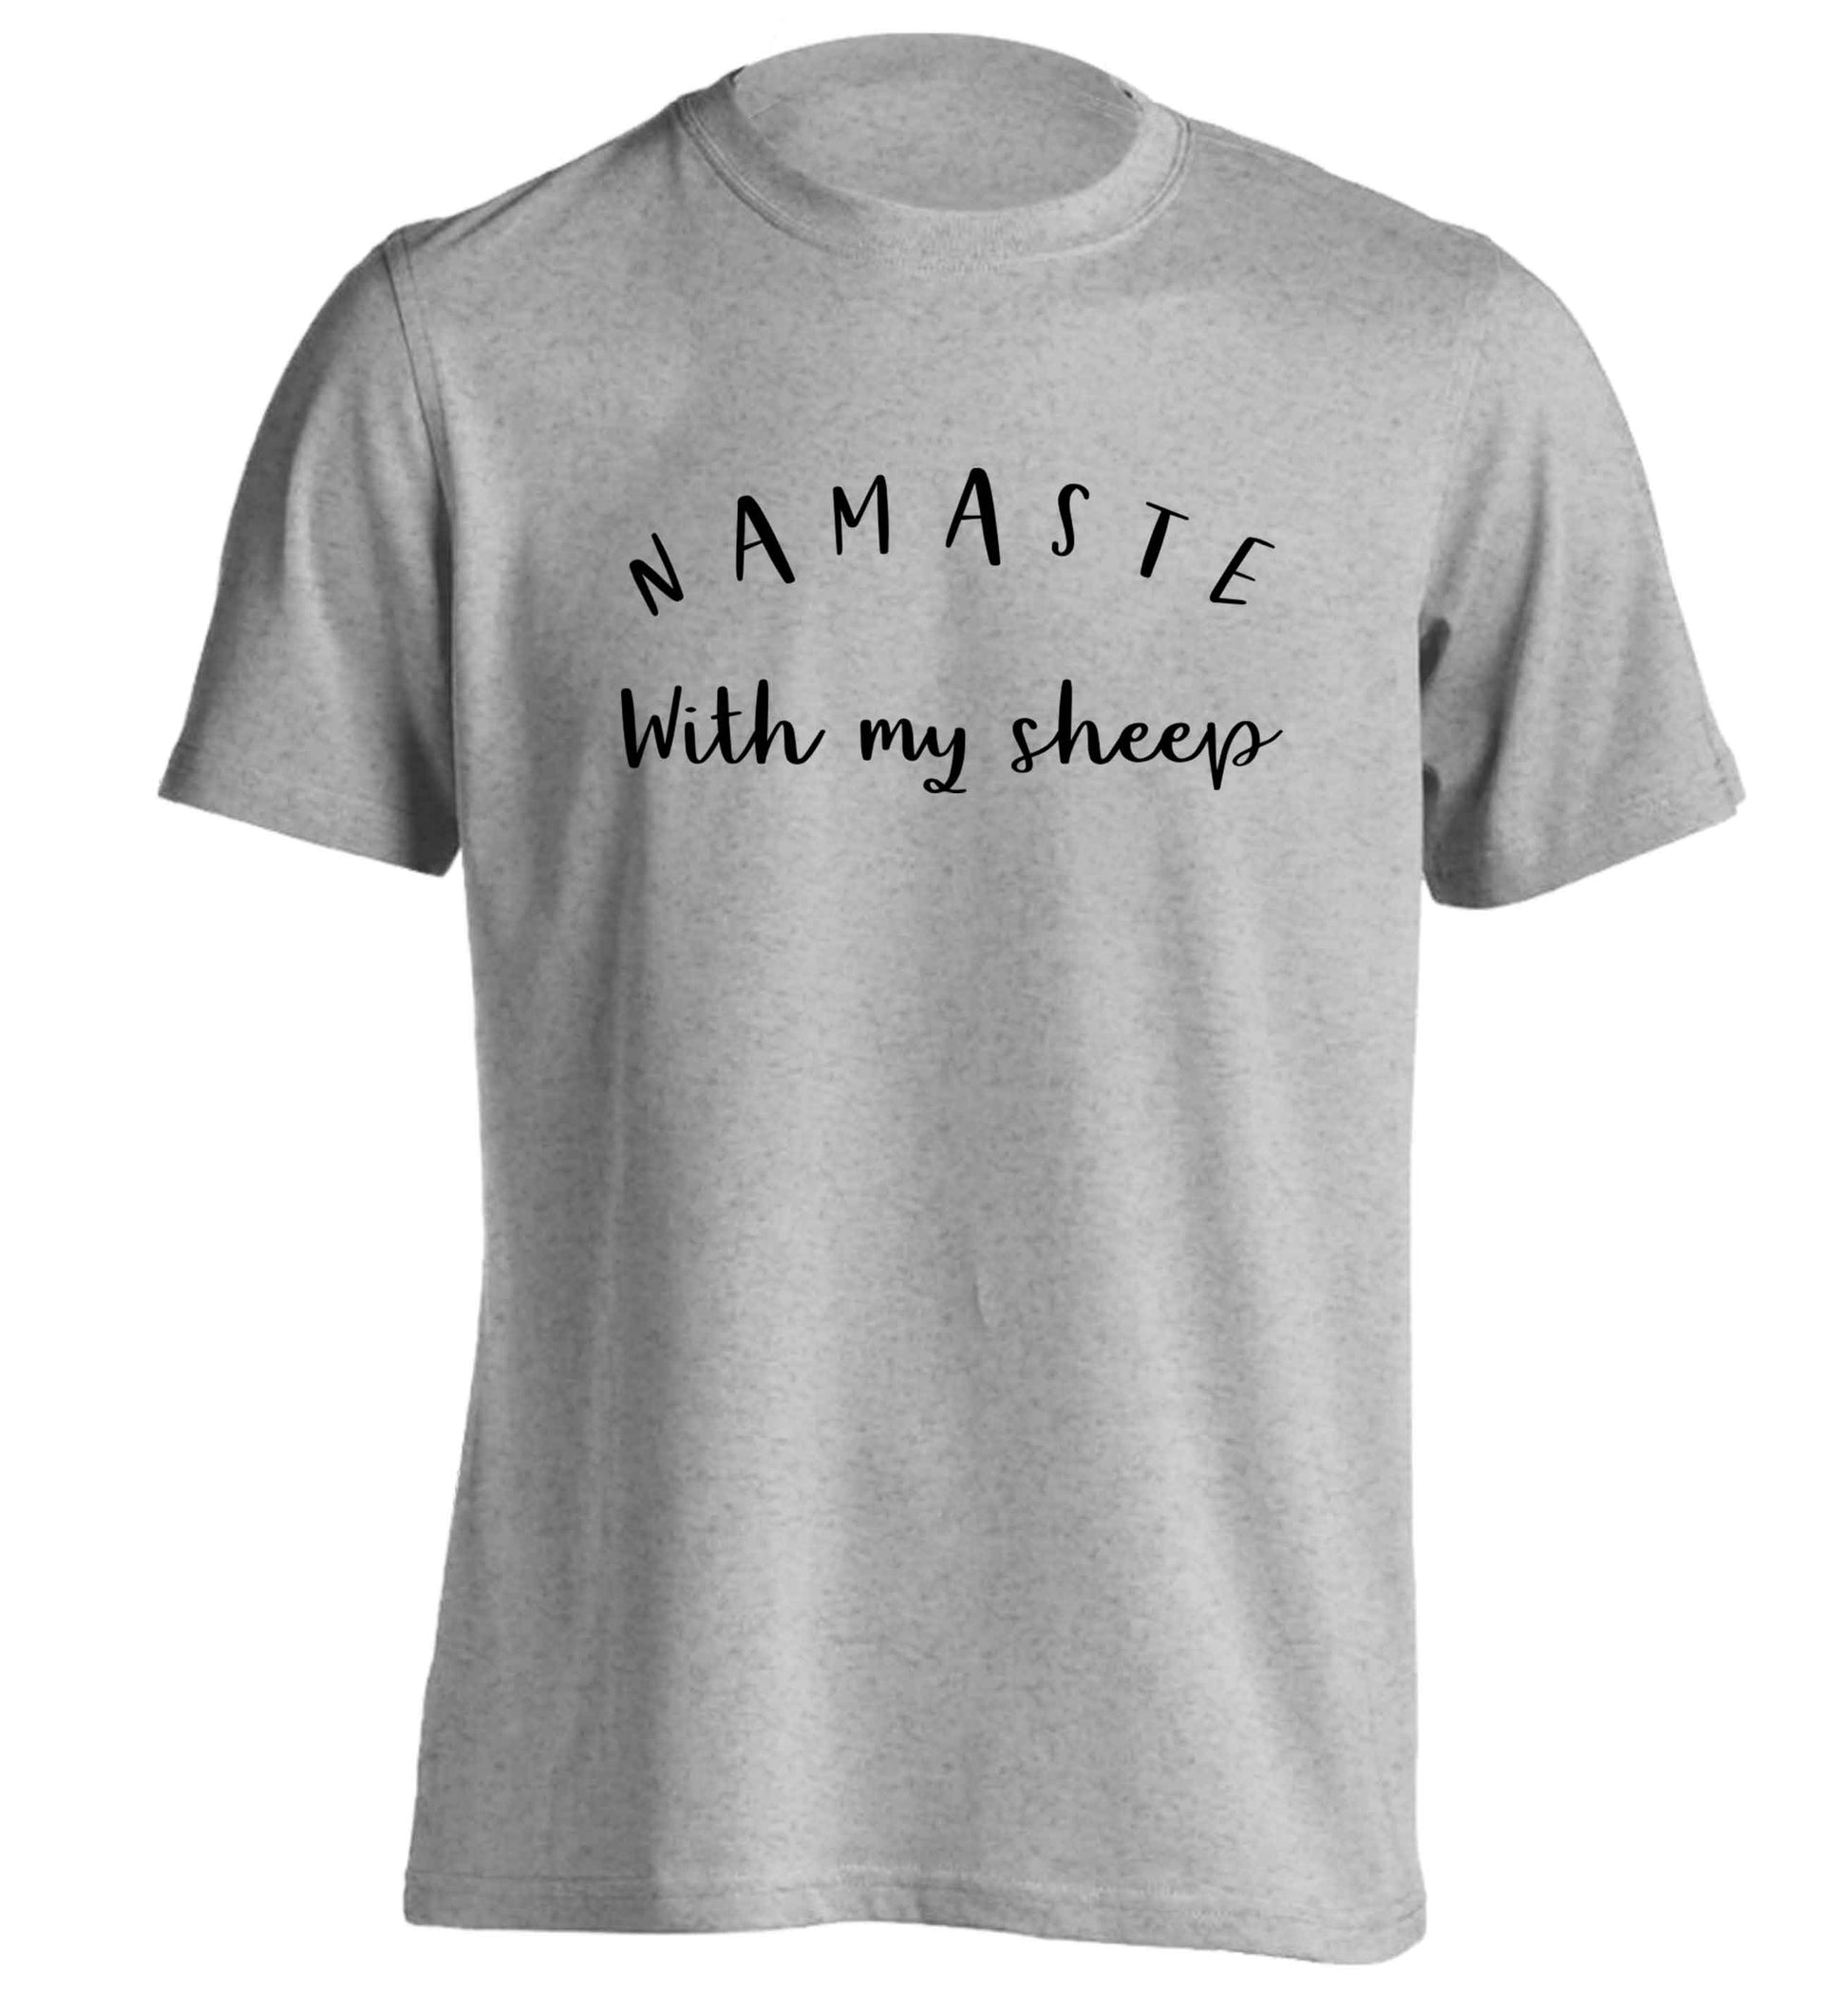 Namaste with my sheep adults unisex grey Tshirt 2XL